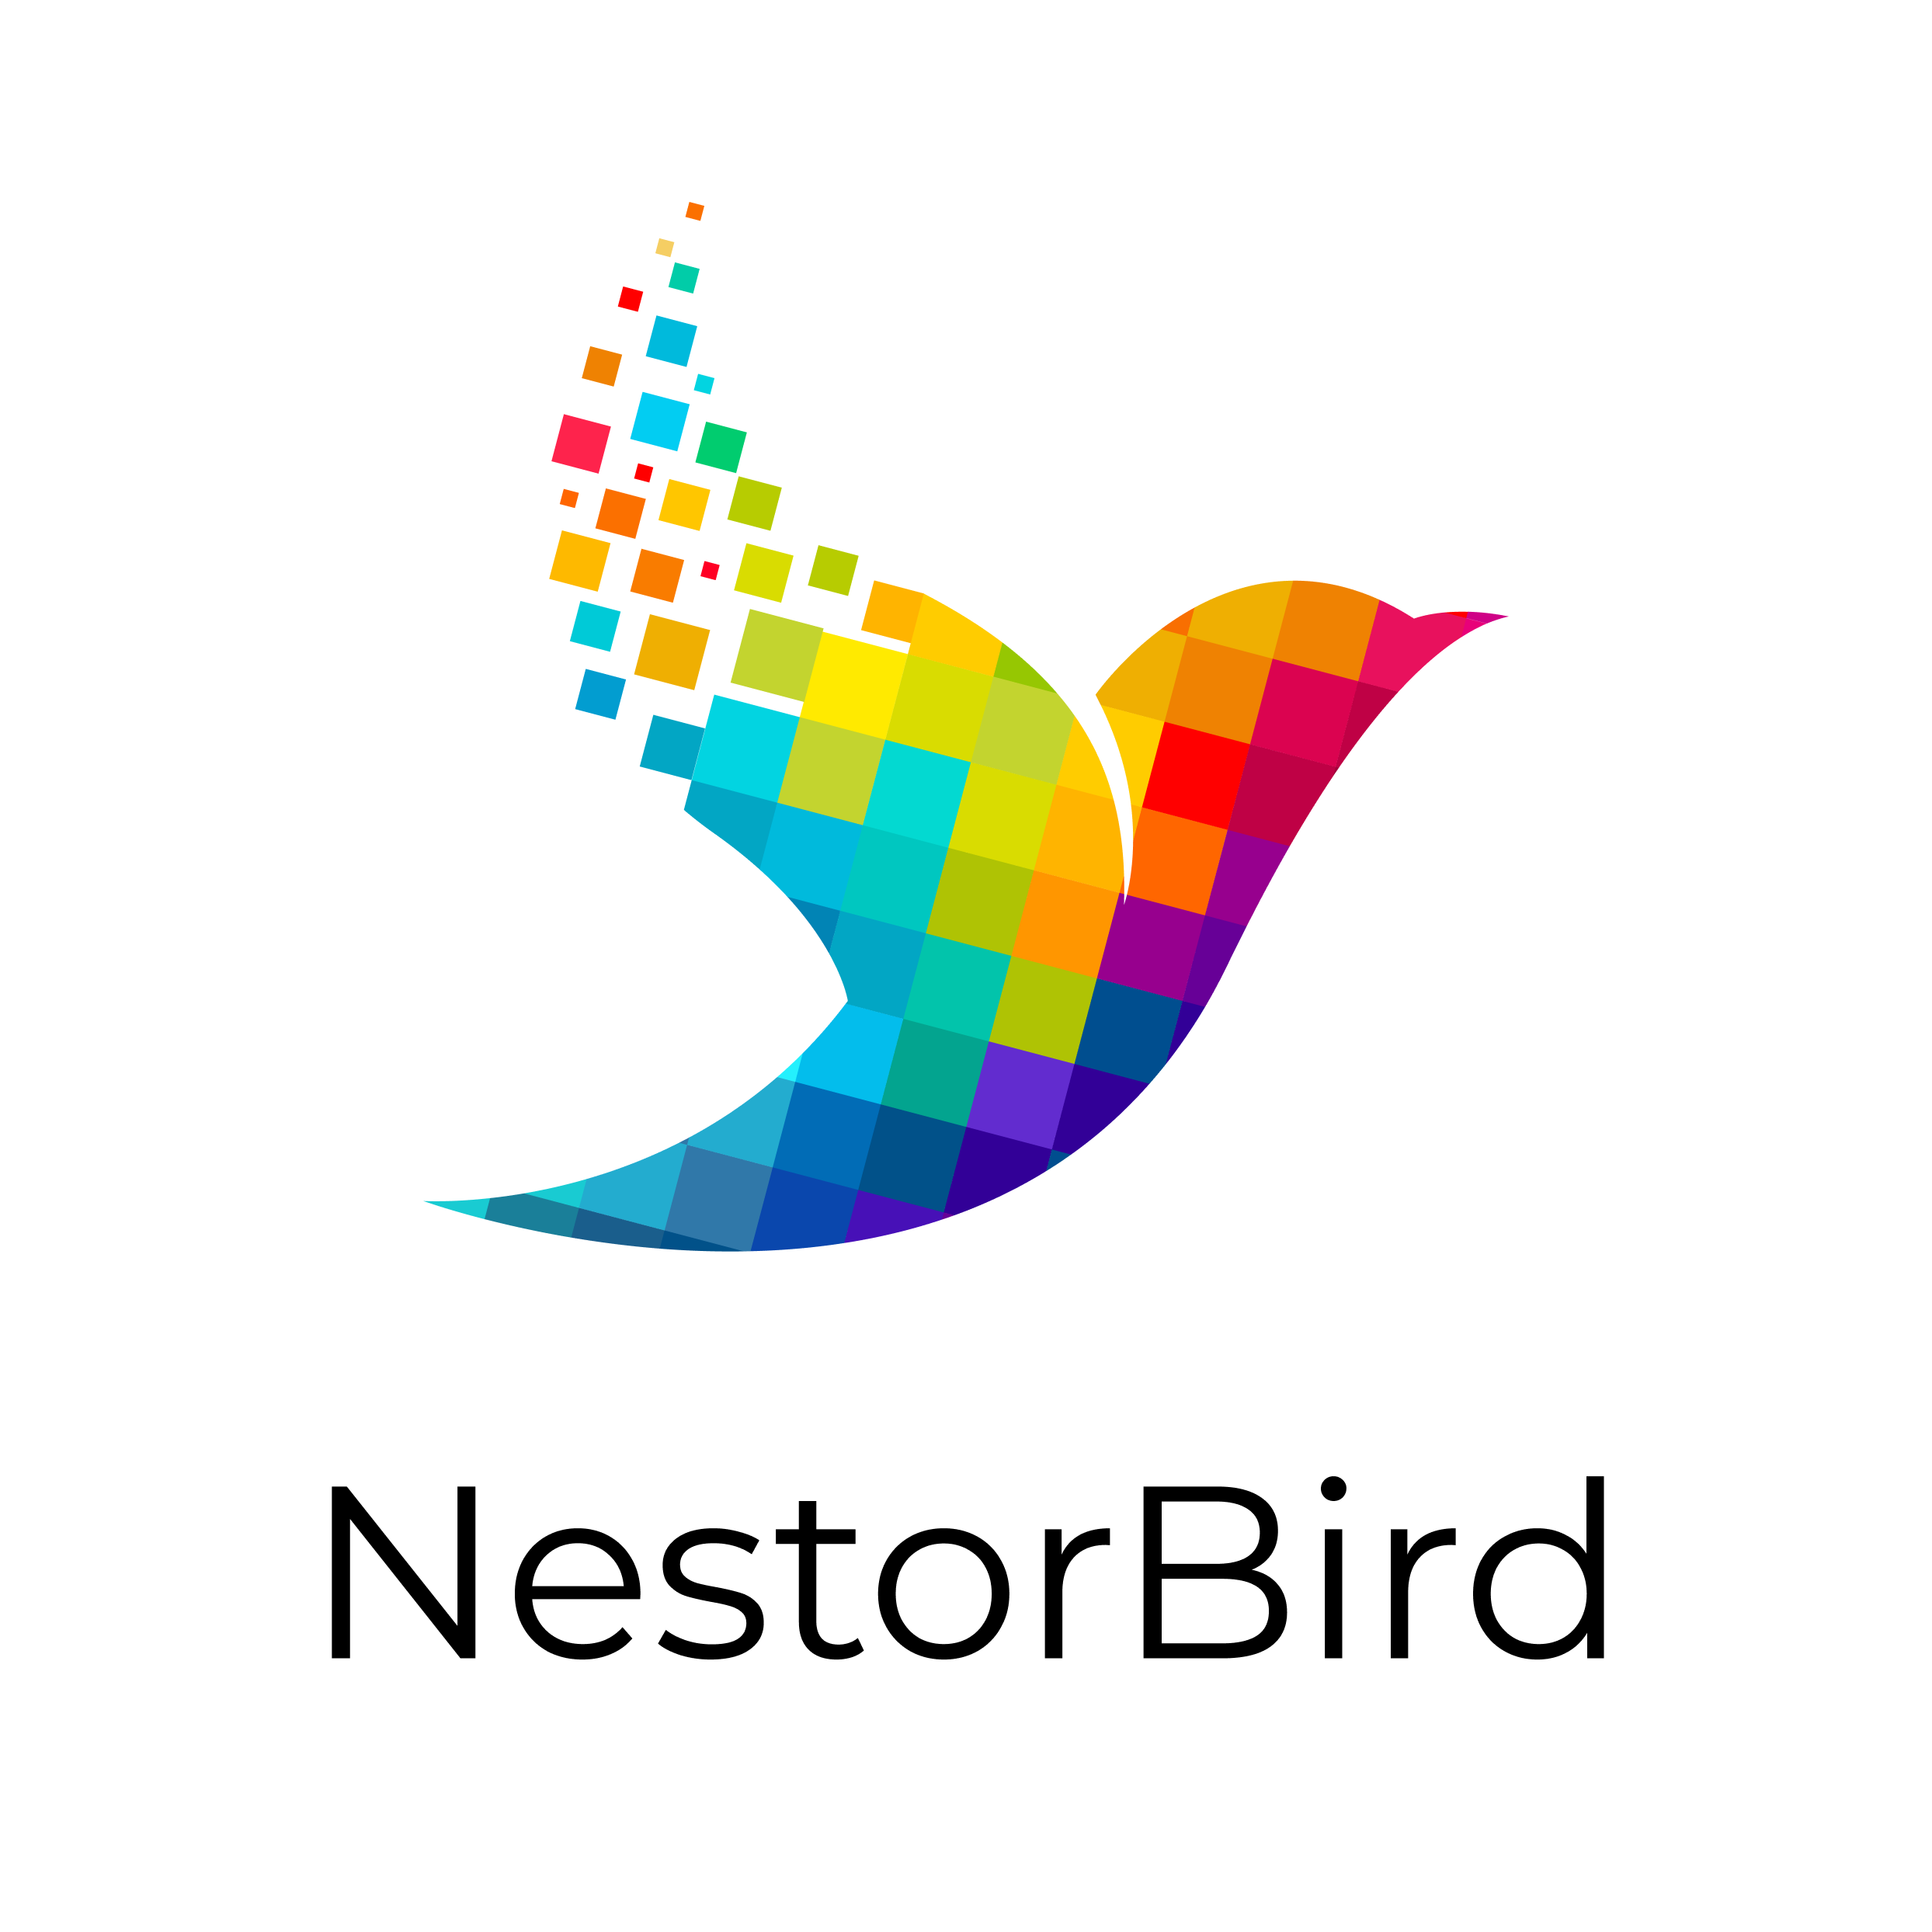 NestorBird Private Limited